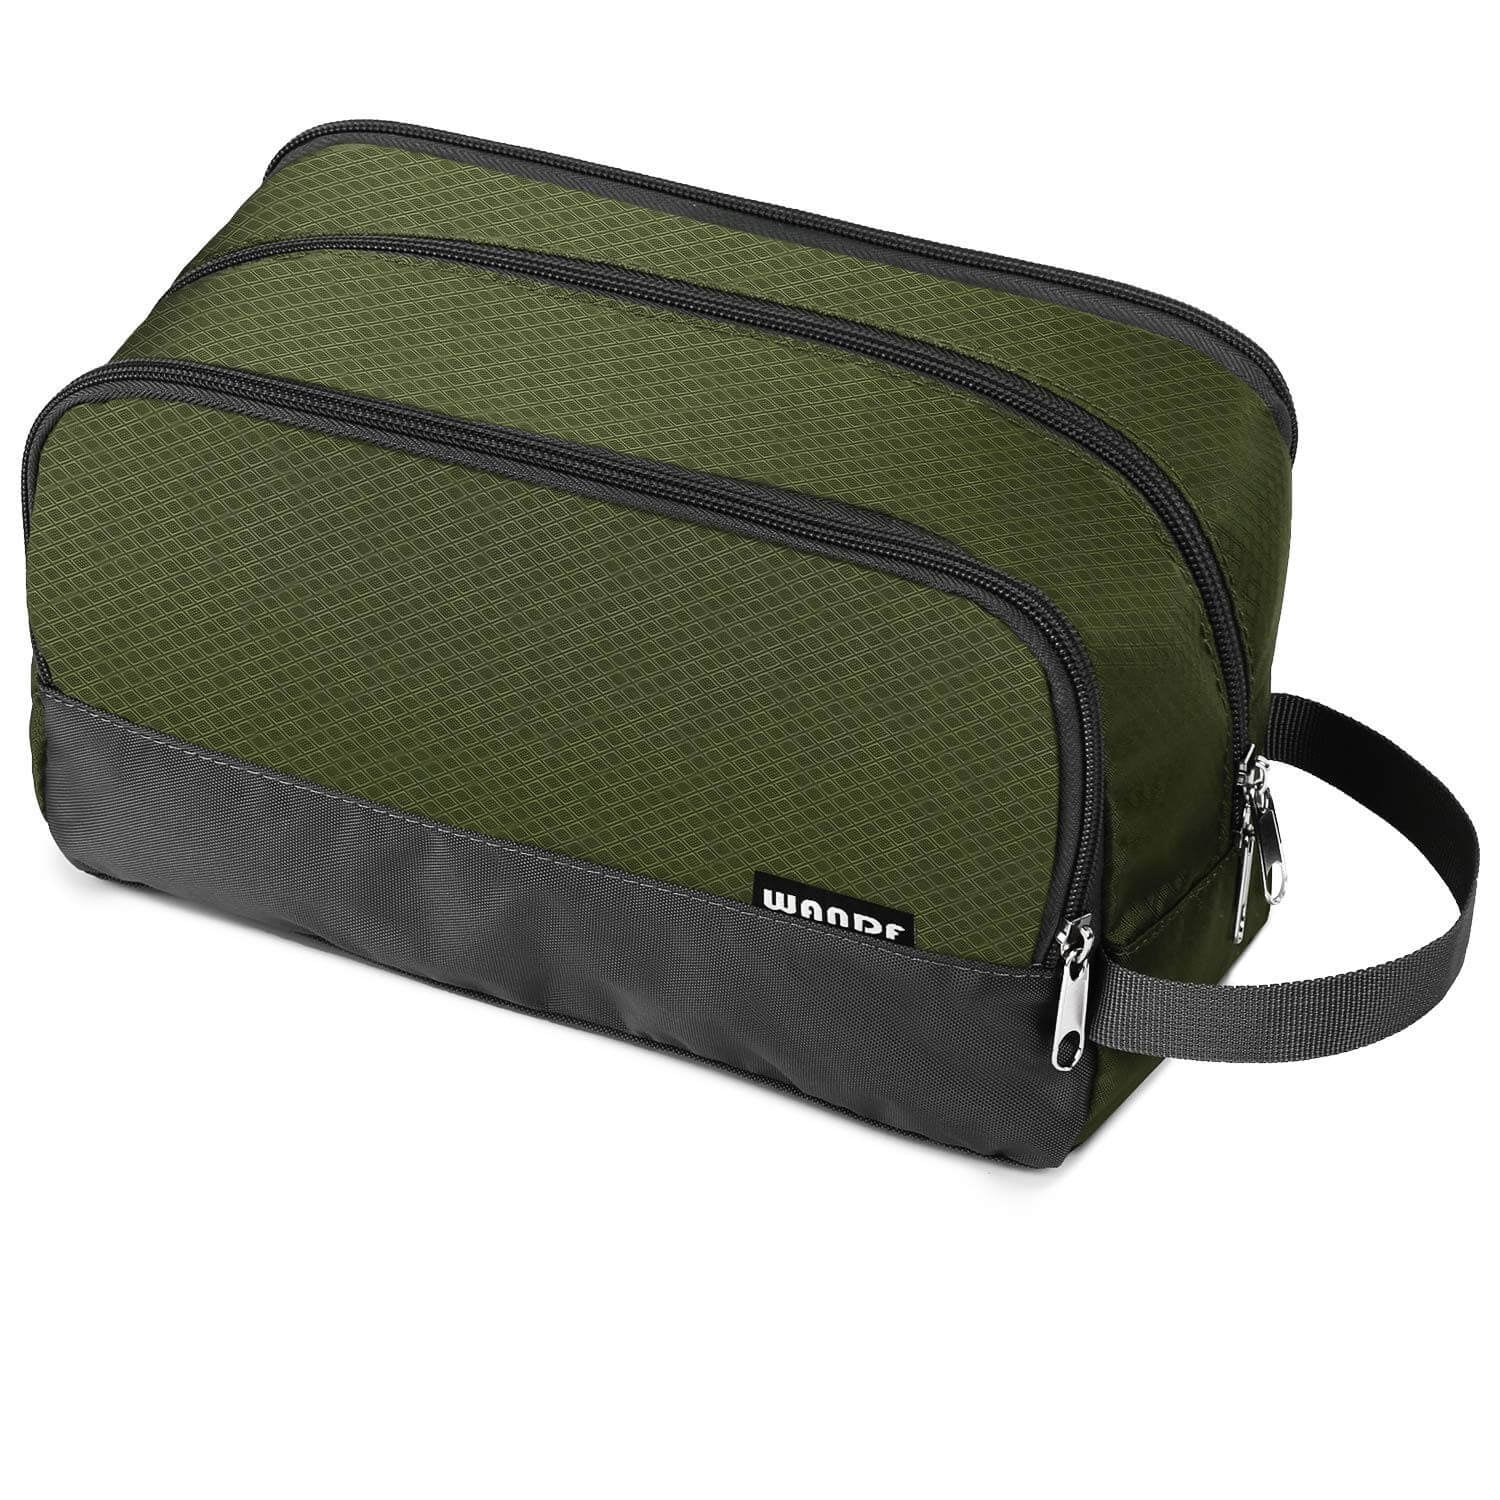 Narwey - Dopp Kit Toiletry Bag Travel Makeup Bags For Men & Women Army Green - 0 ...